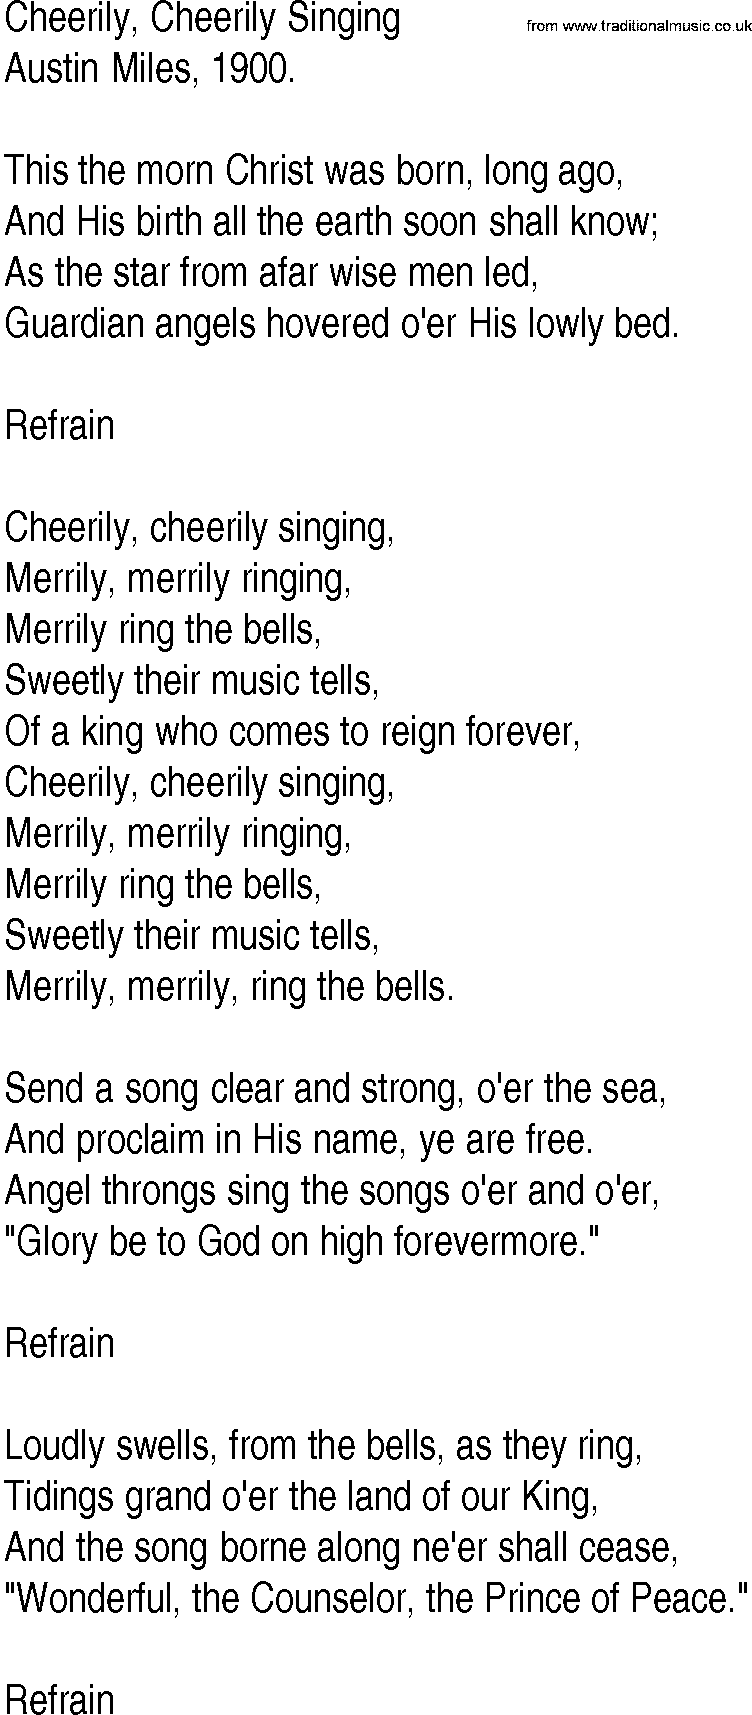 Hymn and Gospel Song: Cheerily, Cheerily Singing by Austin Miles lyrics